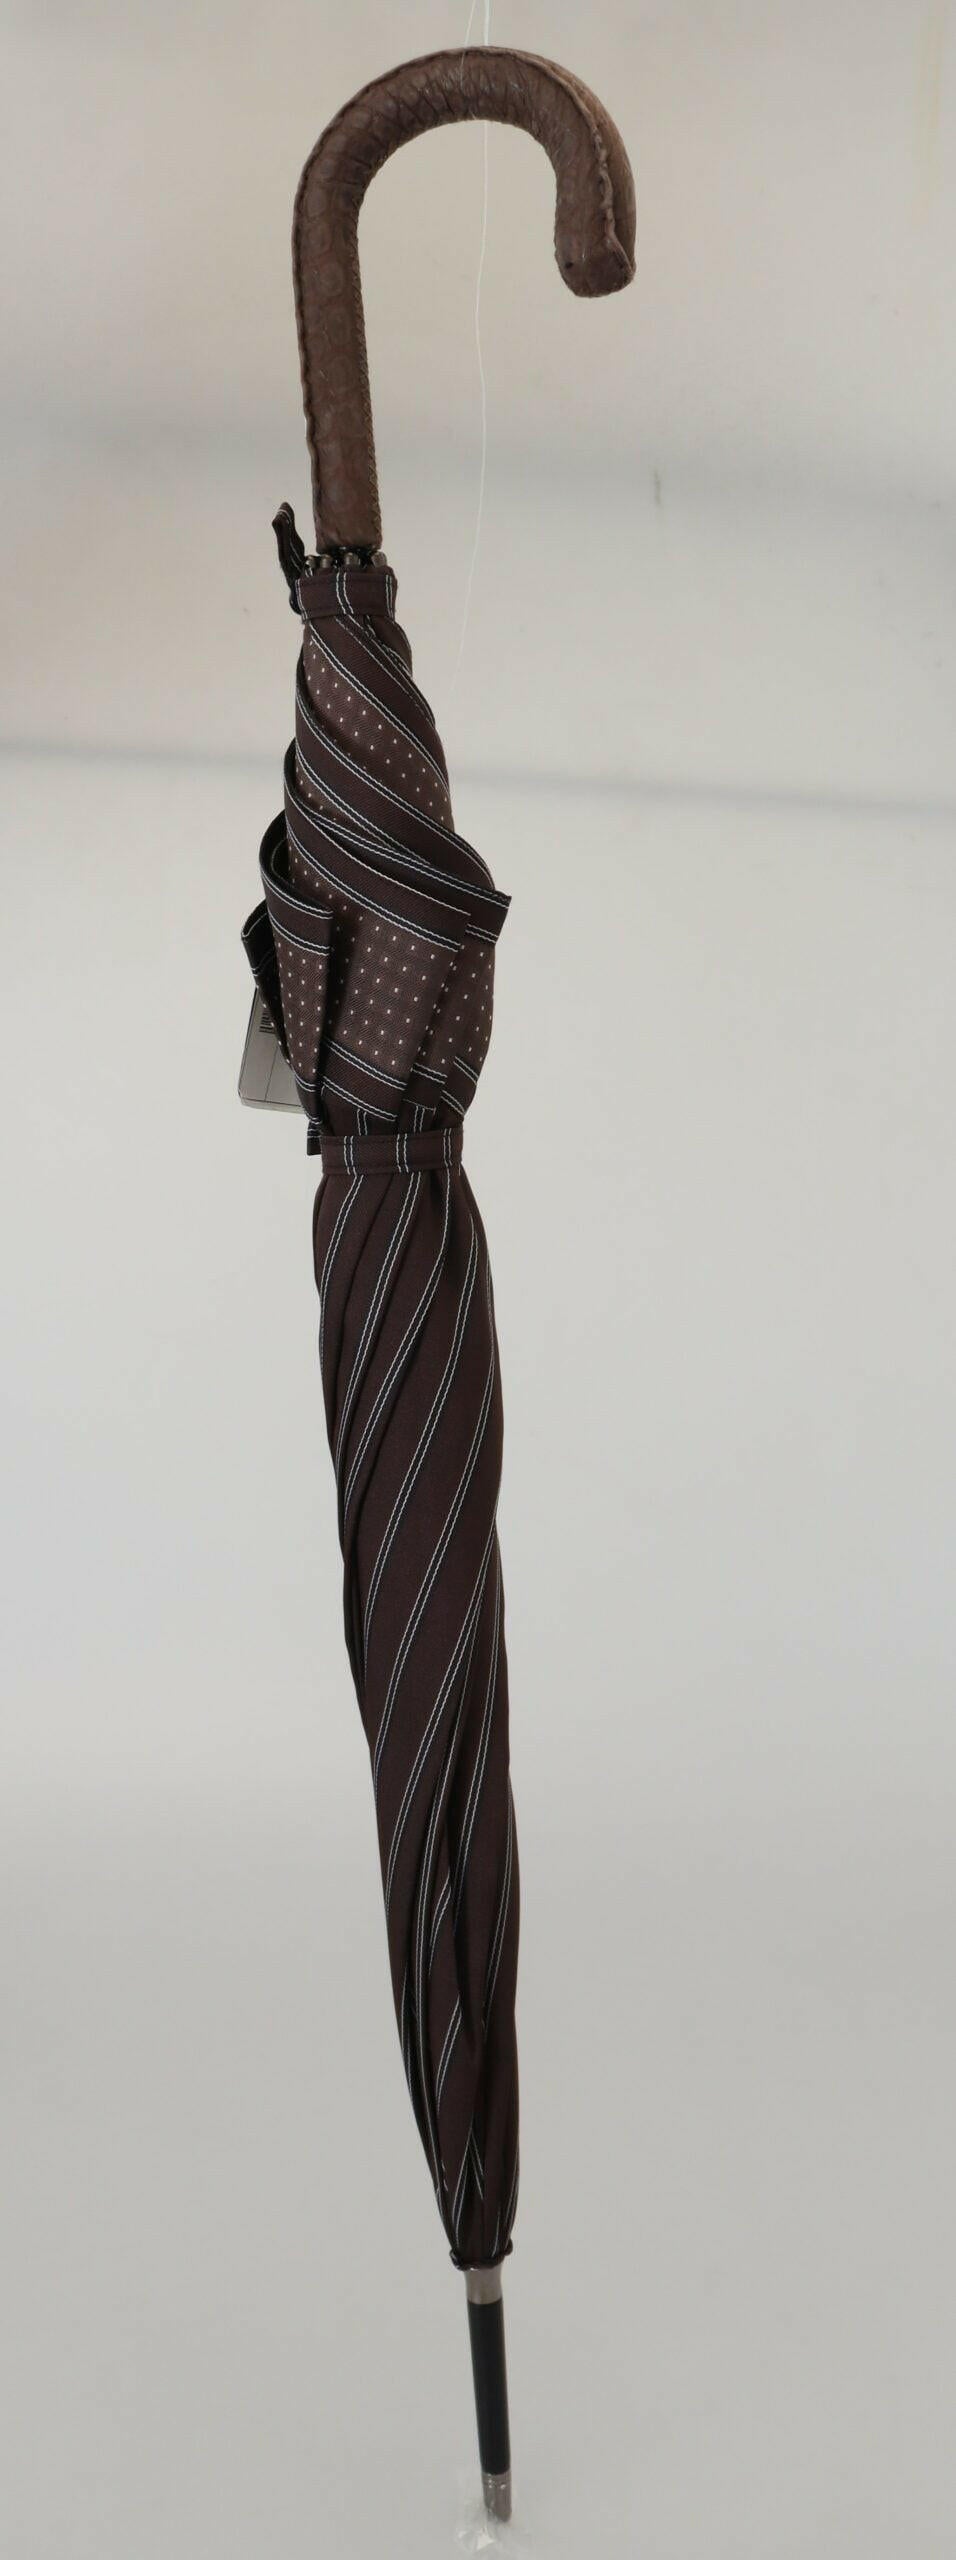 Dolce & Gabbana Brown Striped Leather Handle Collapsible Sartoria Umbrella - GENUINE AUTHENTIC BRAND LLC  